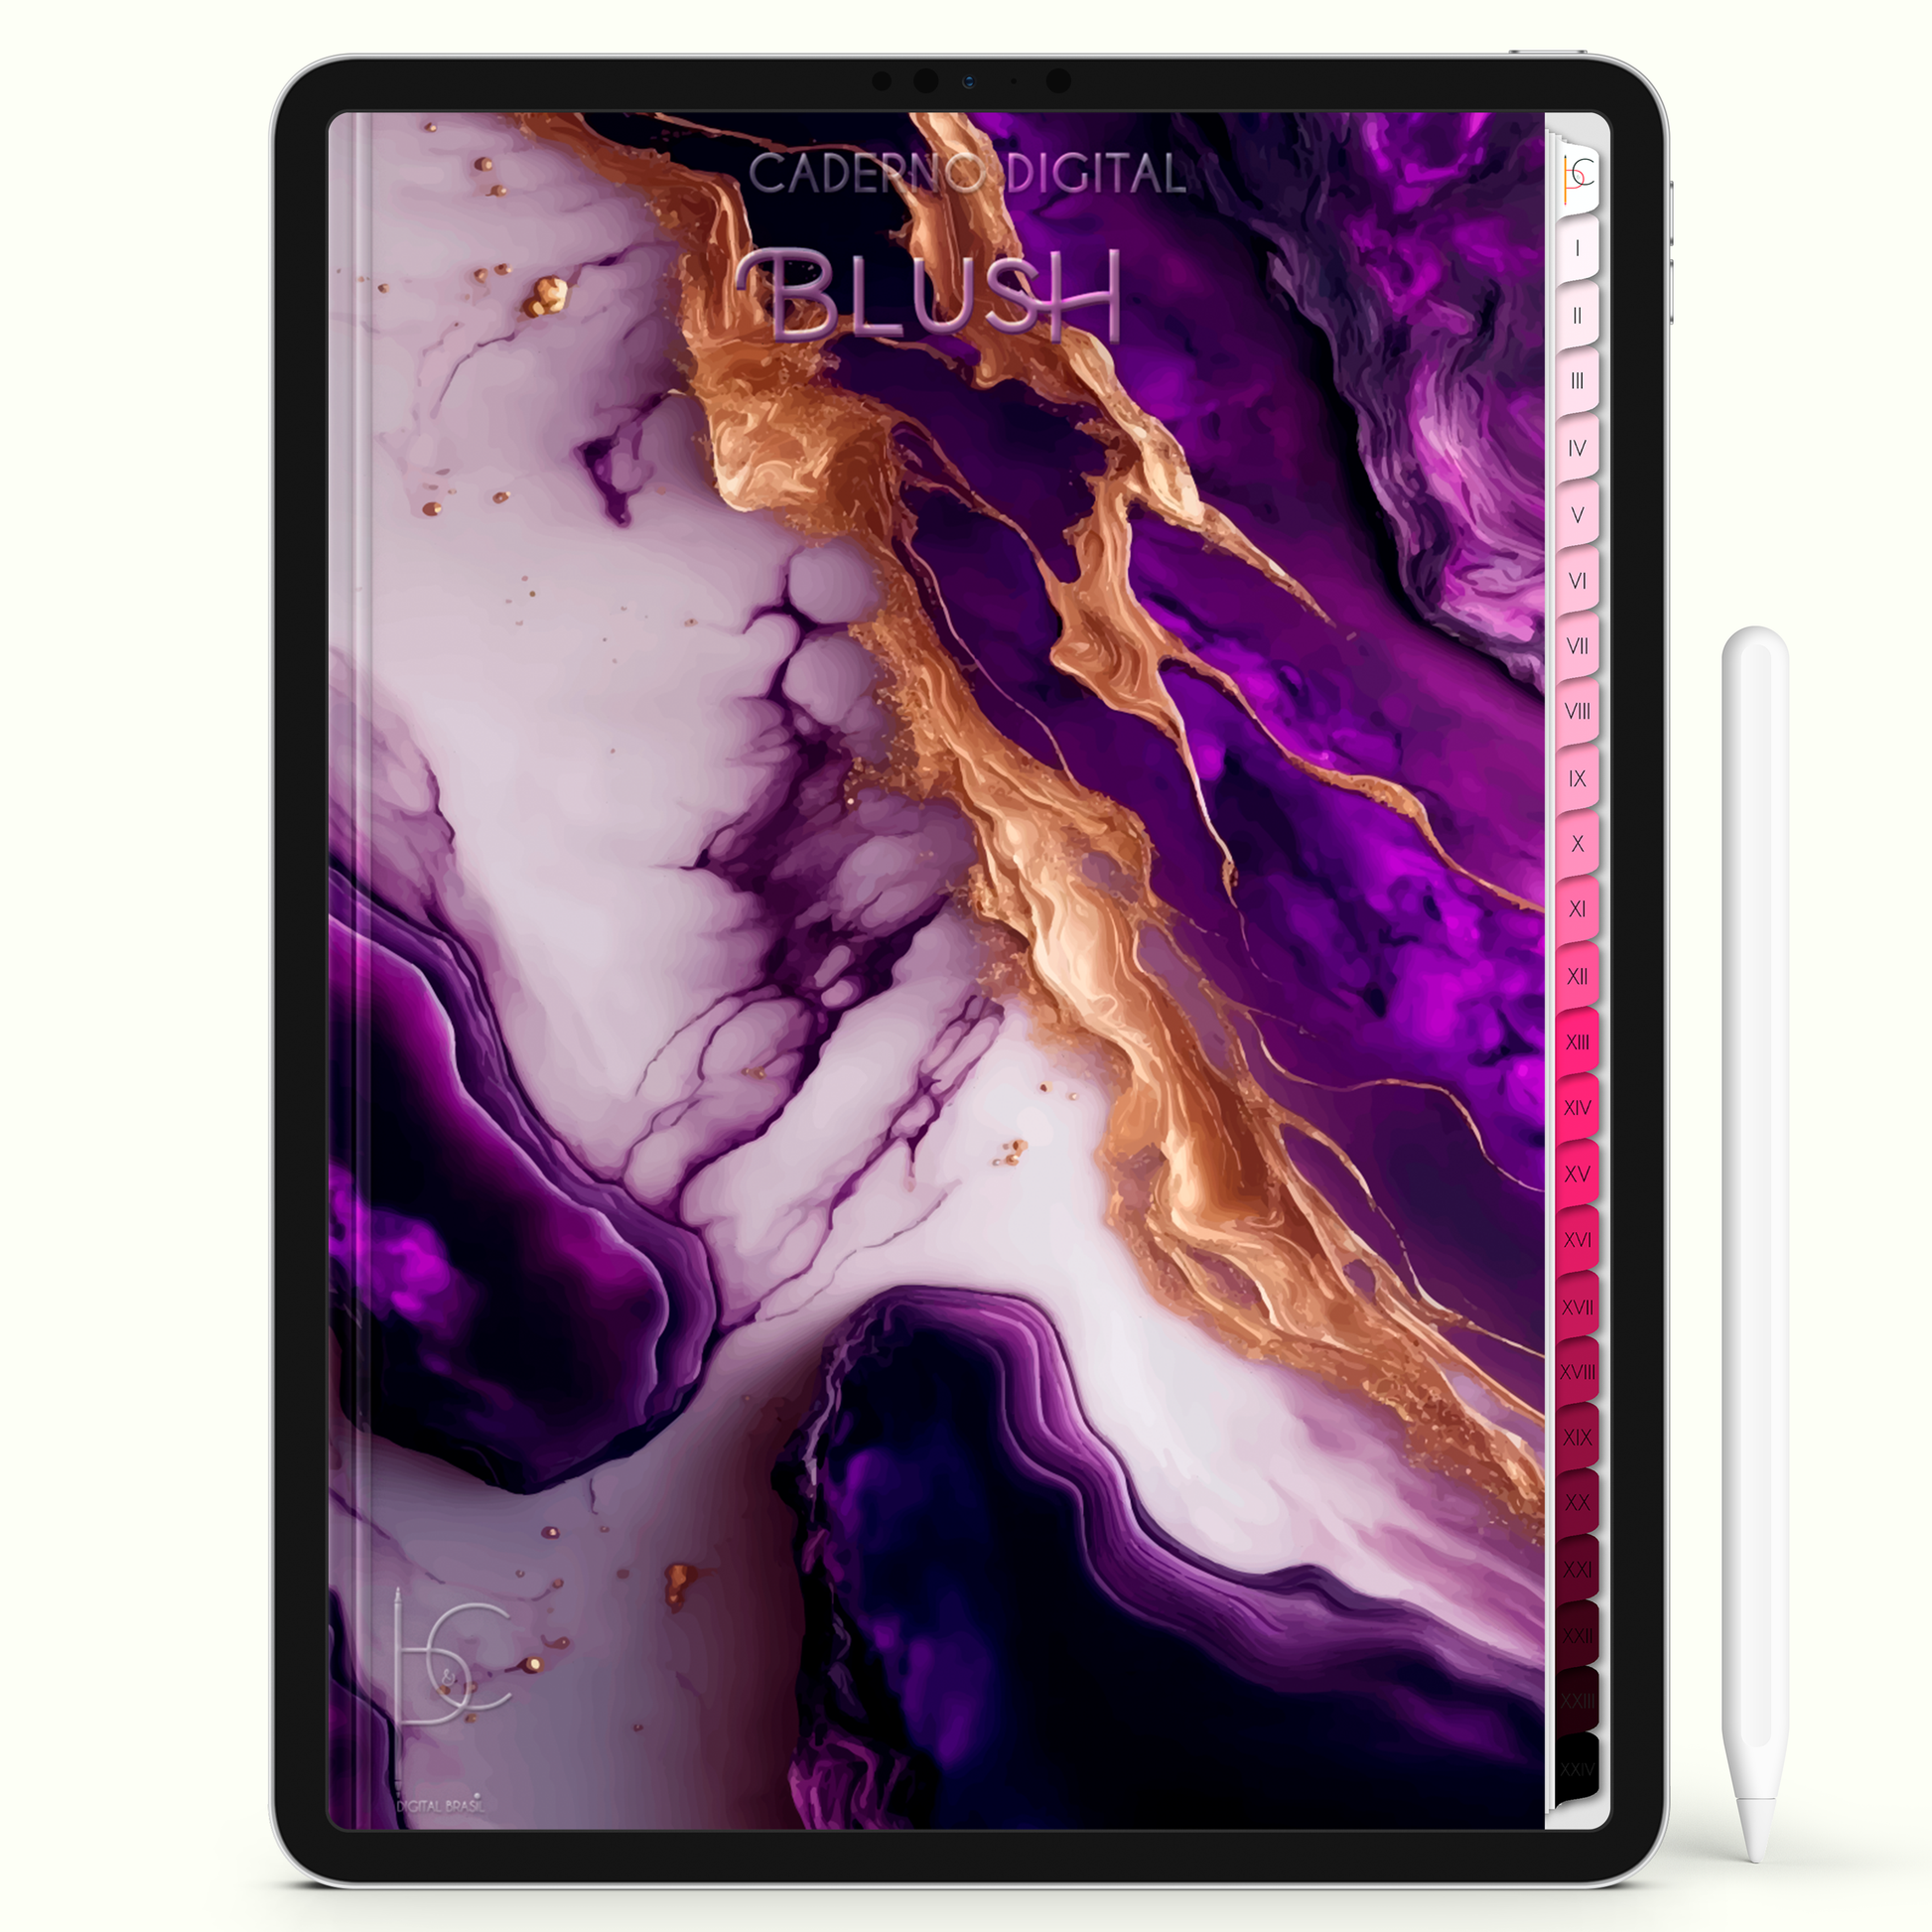 Caderno Digital Blush Mármore Gold 24 Matérias • iPad e Tablet Android • Download instantâneo • Sustentável